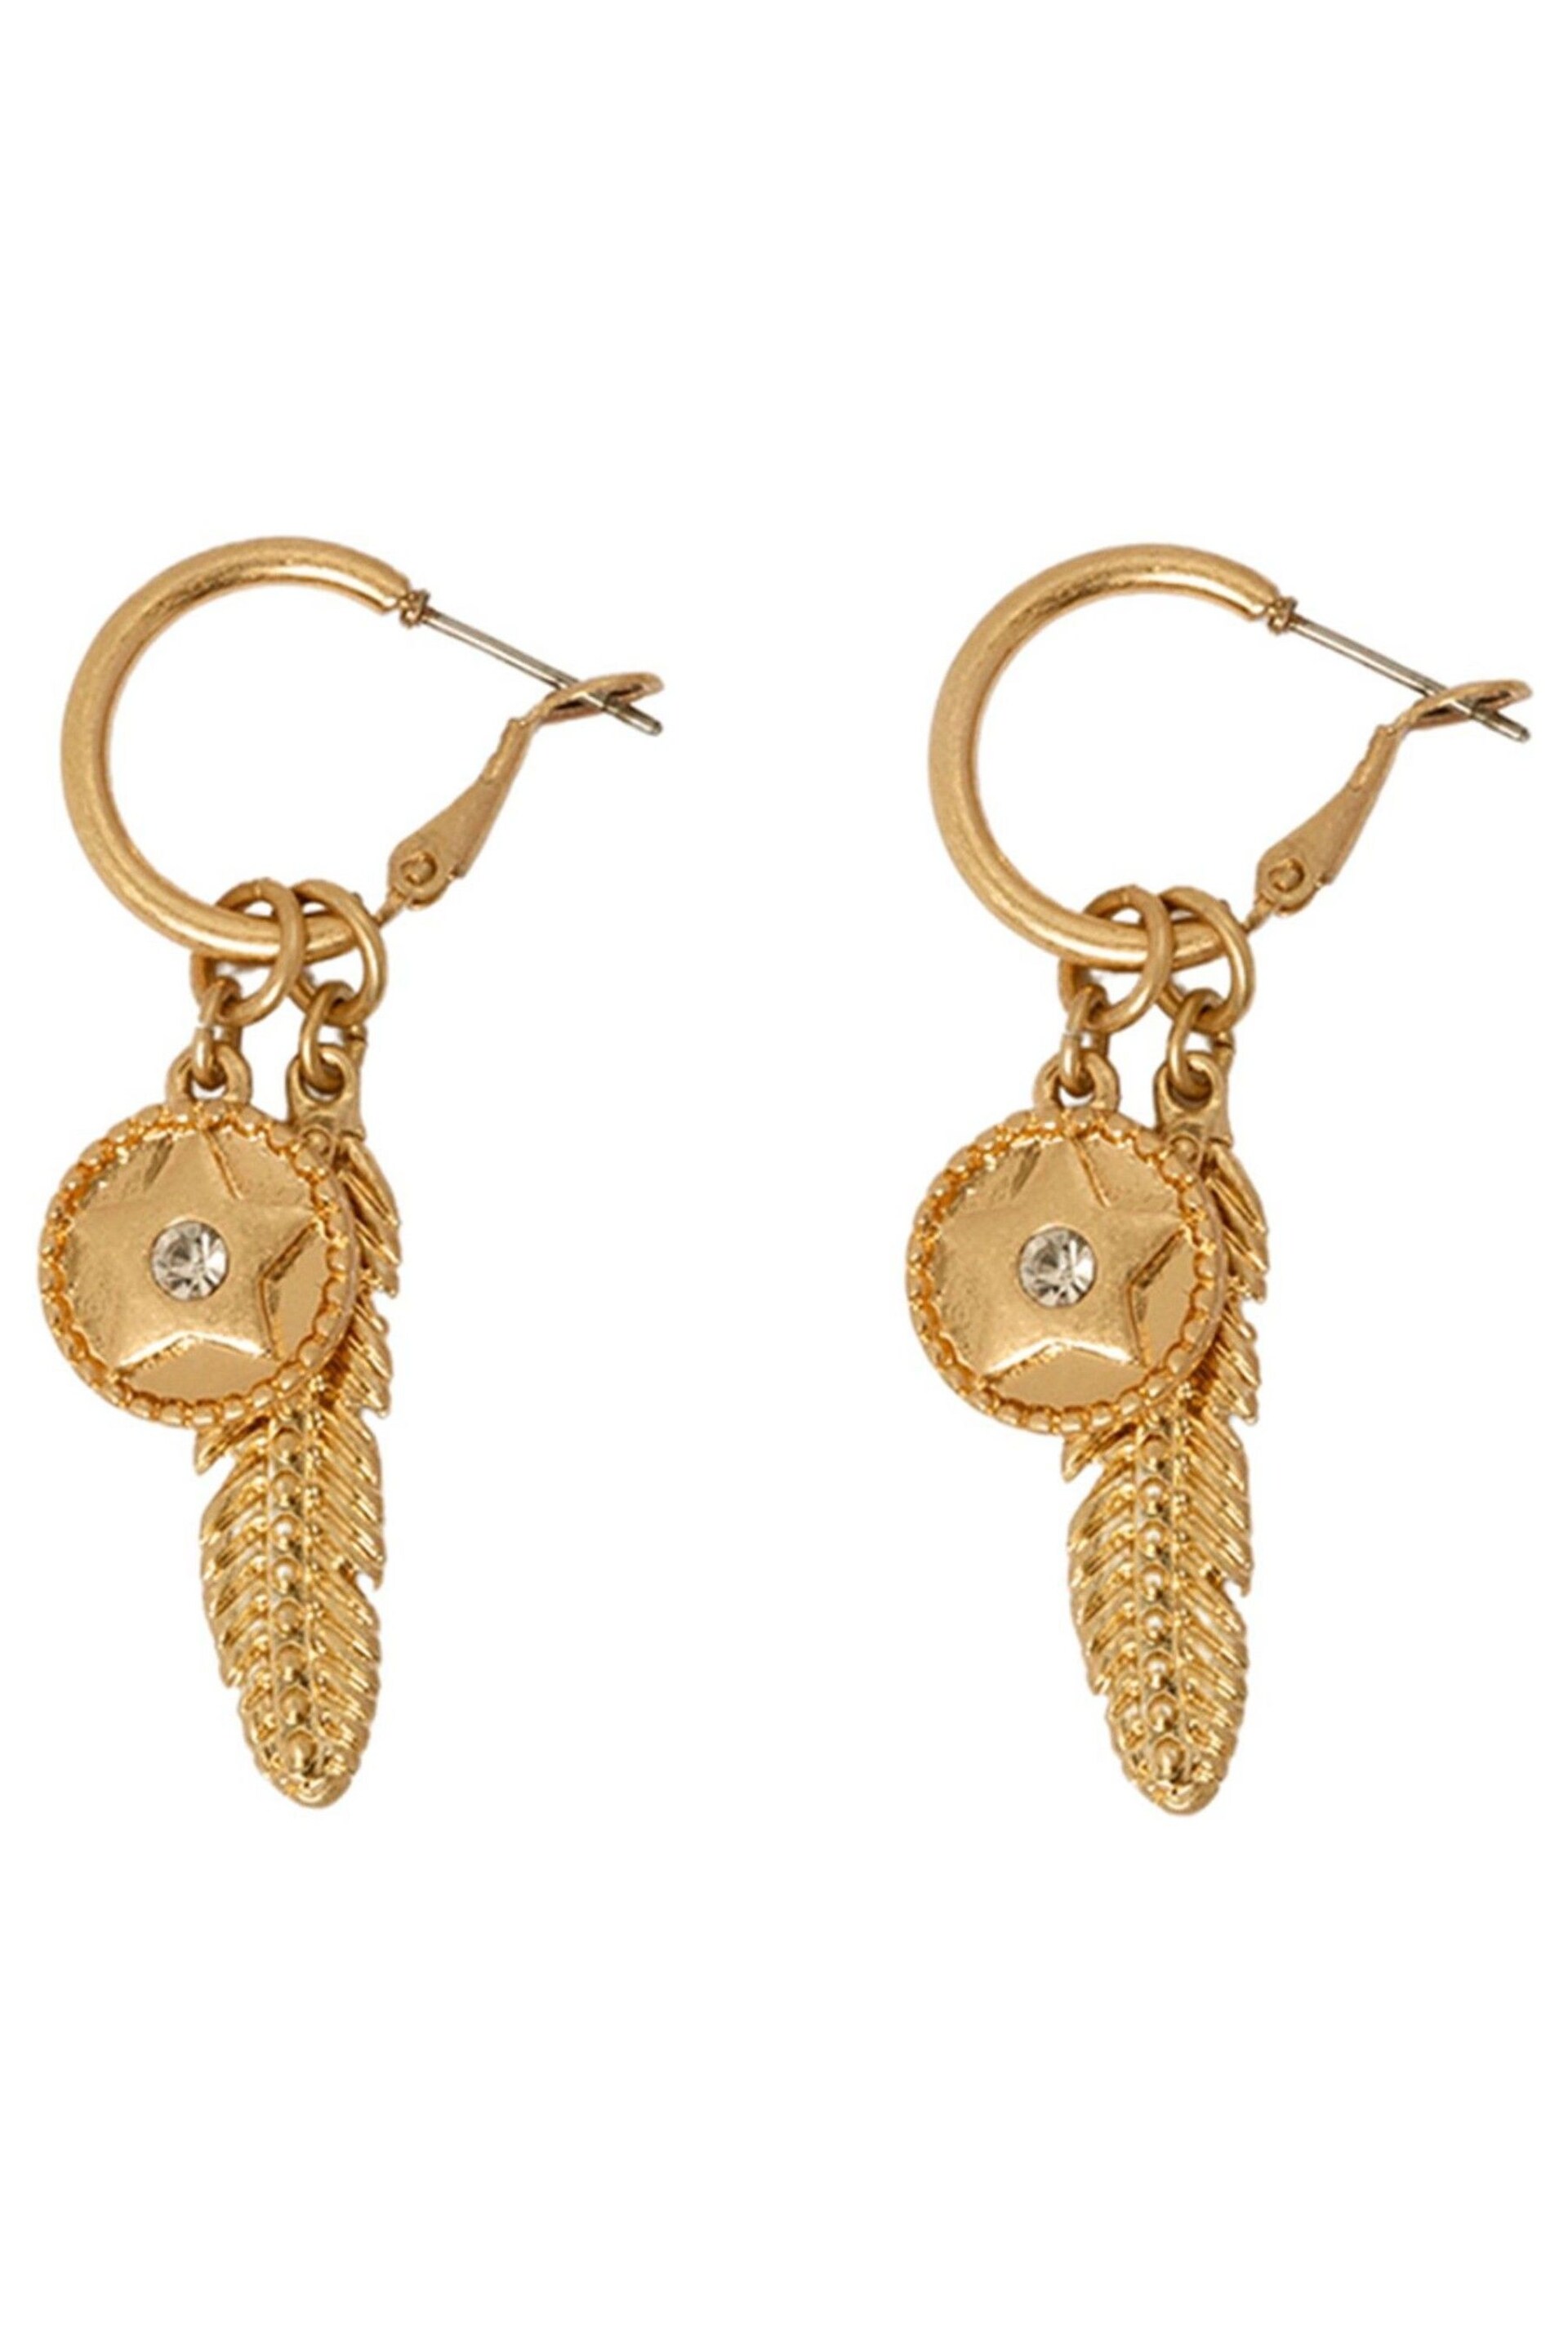 Bibi Bijoux Gold Tone Celestial Feather Interchangeable Hoop Earrings - Image 1 of 4